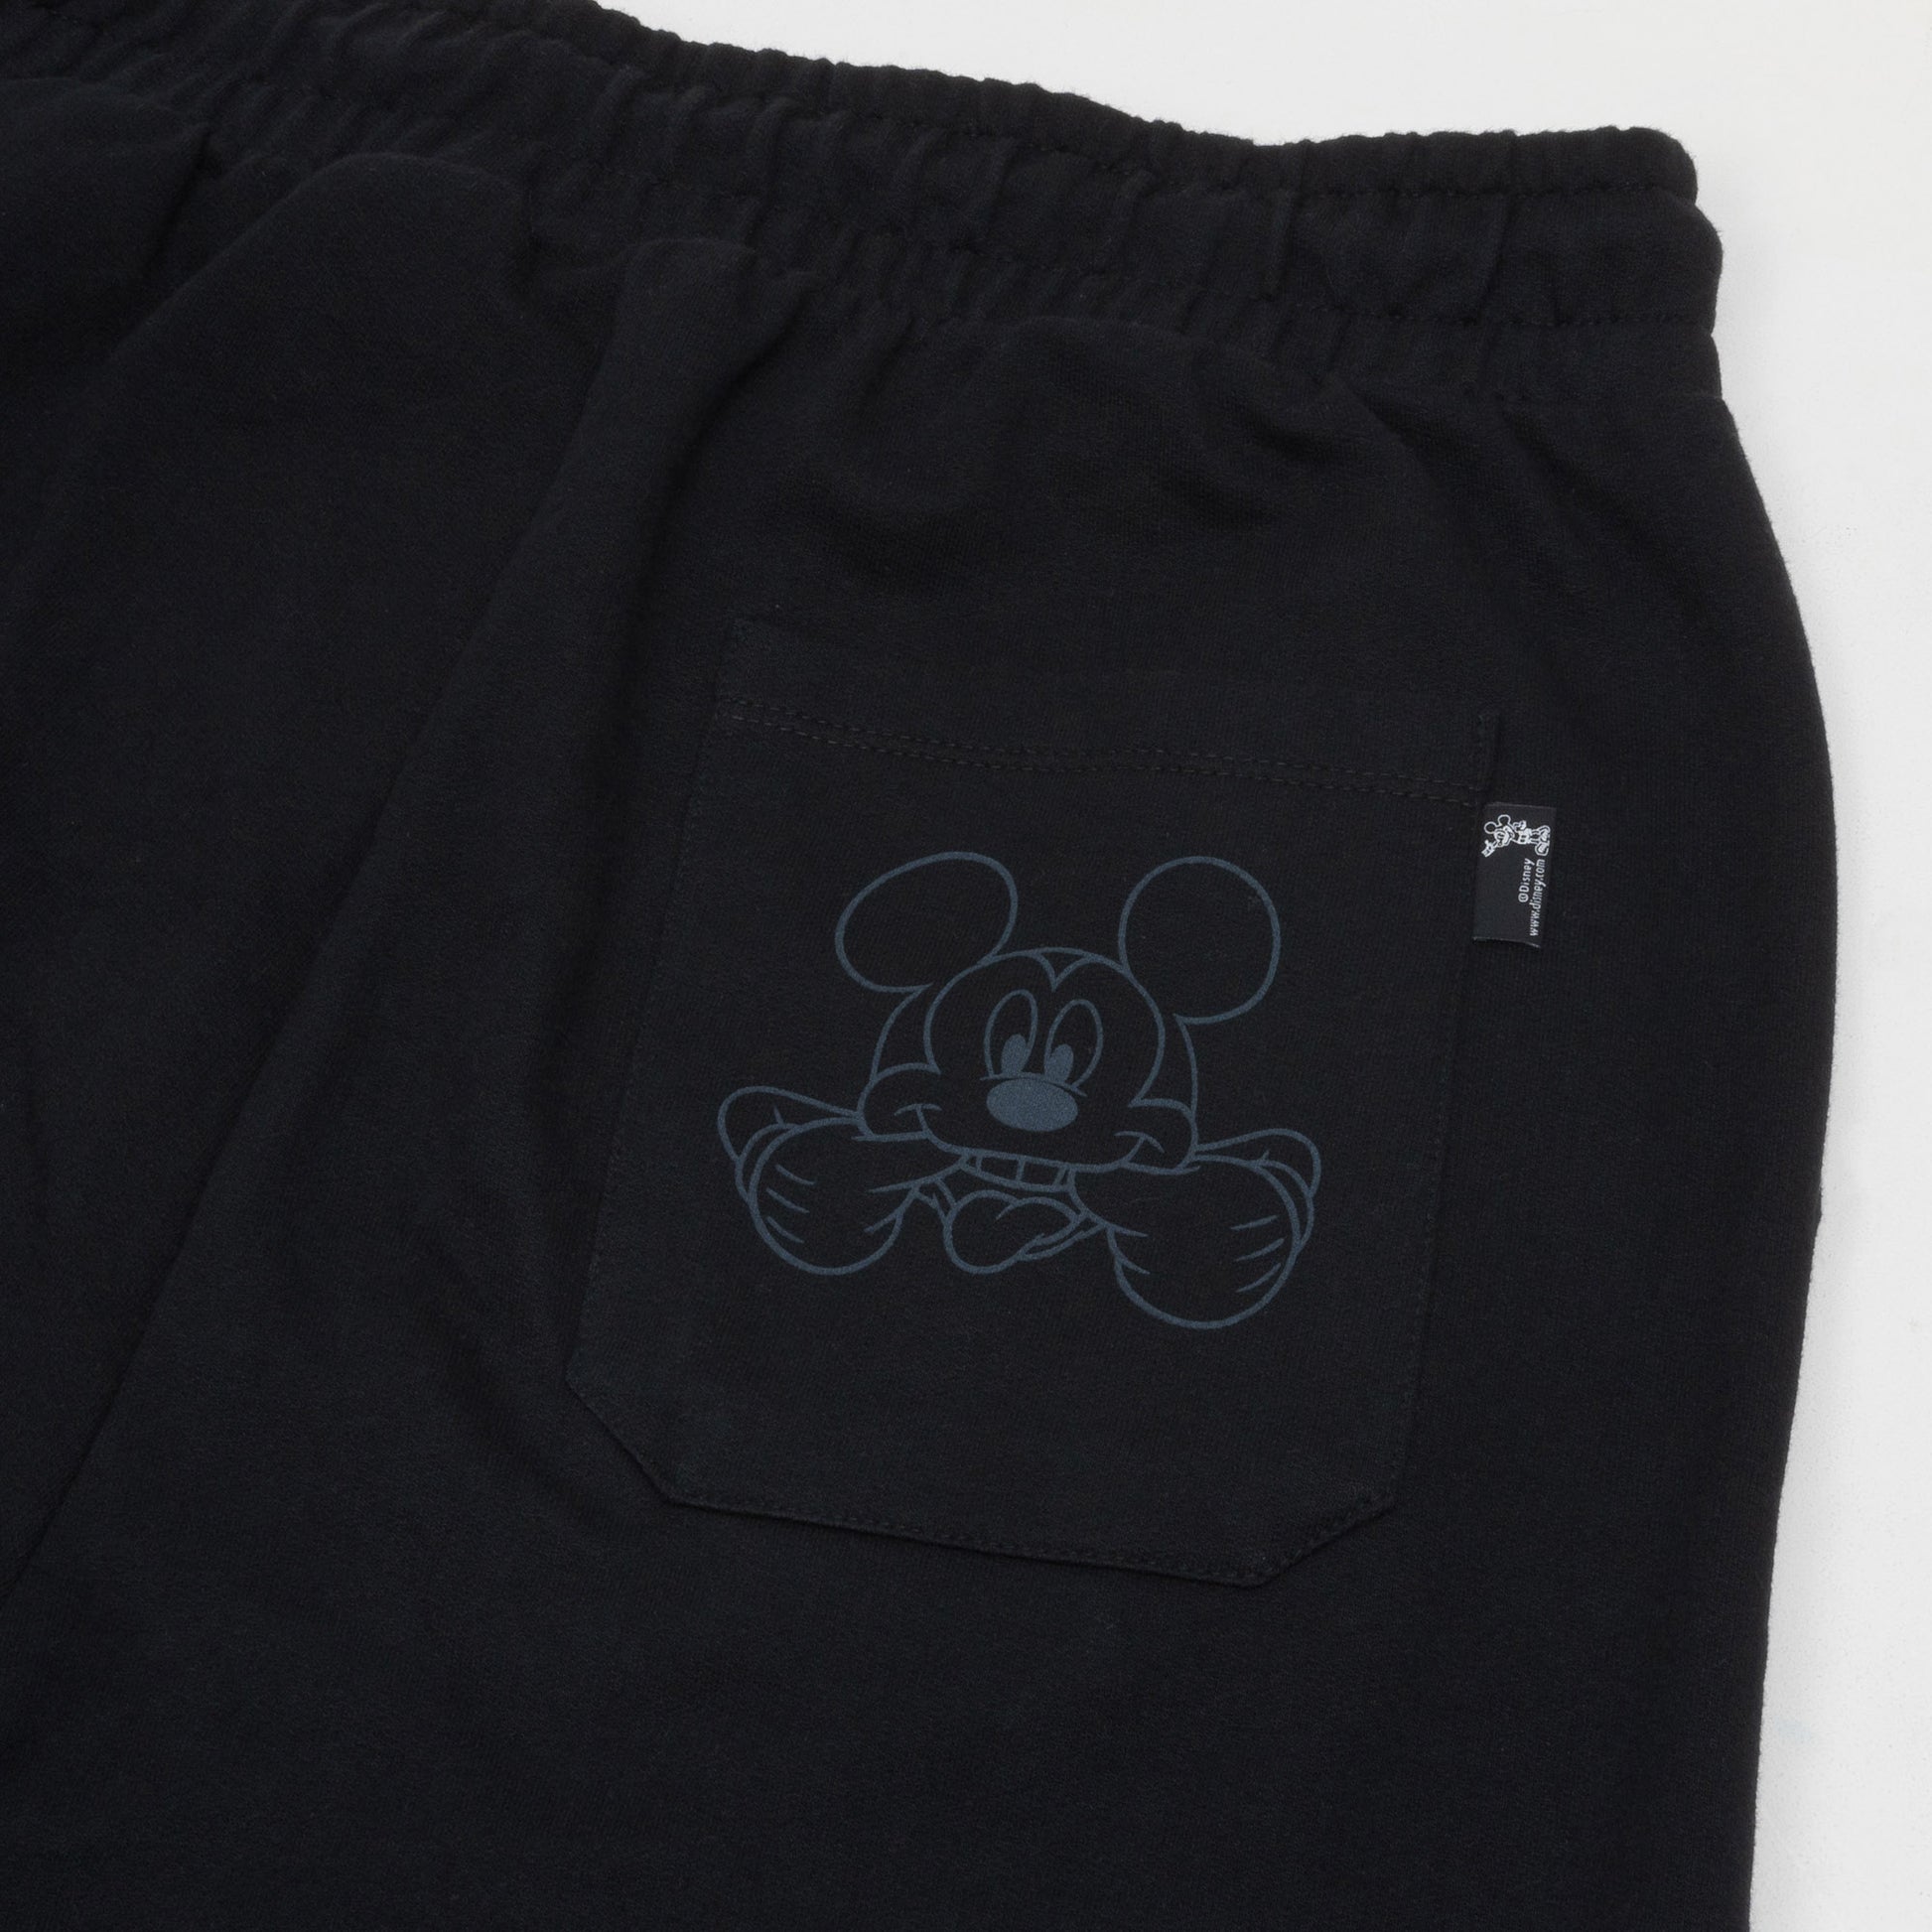 HIGH X Disney Sweatpant (Black) HIGH